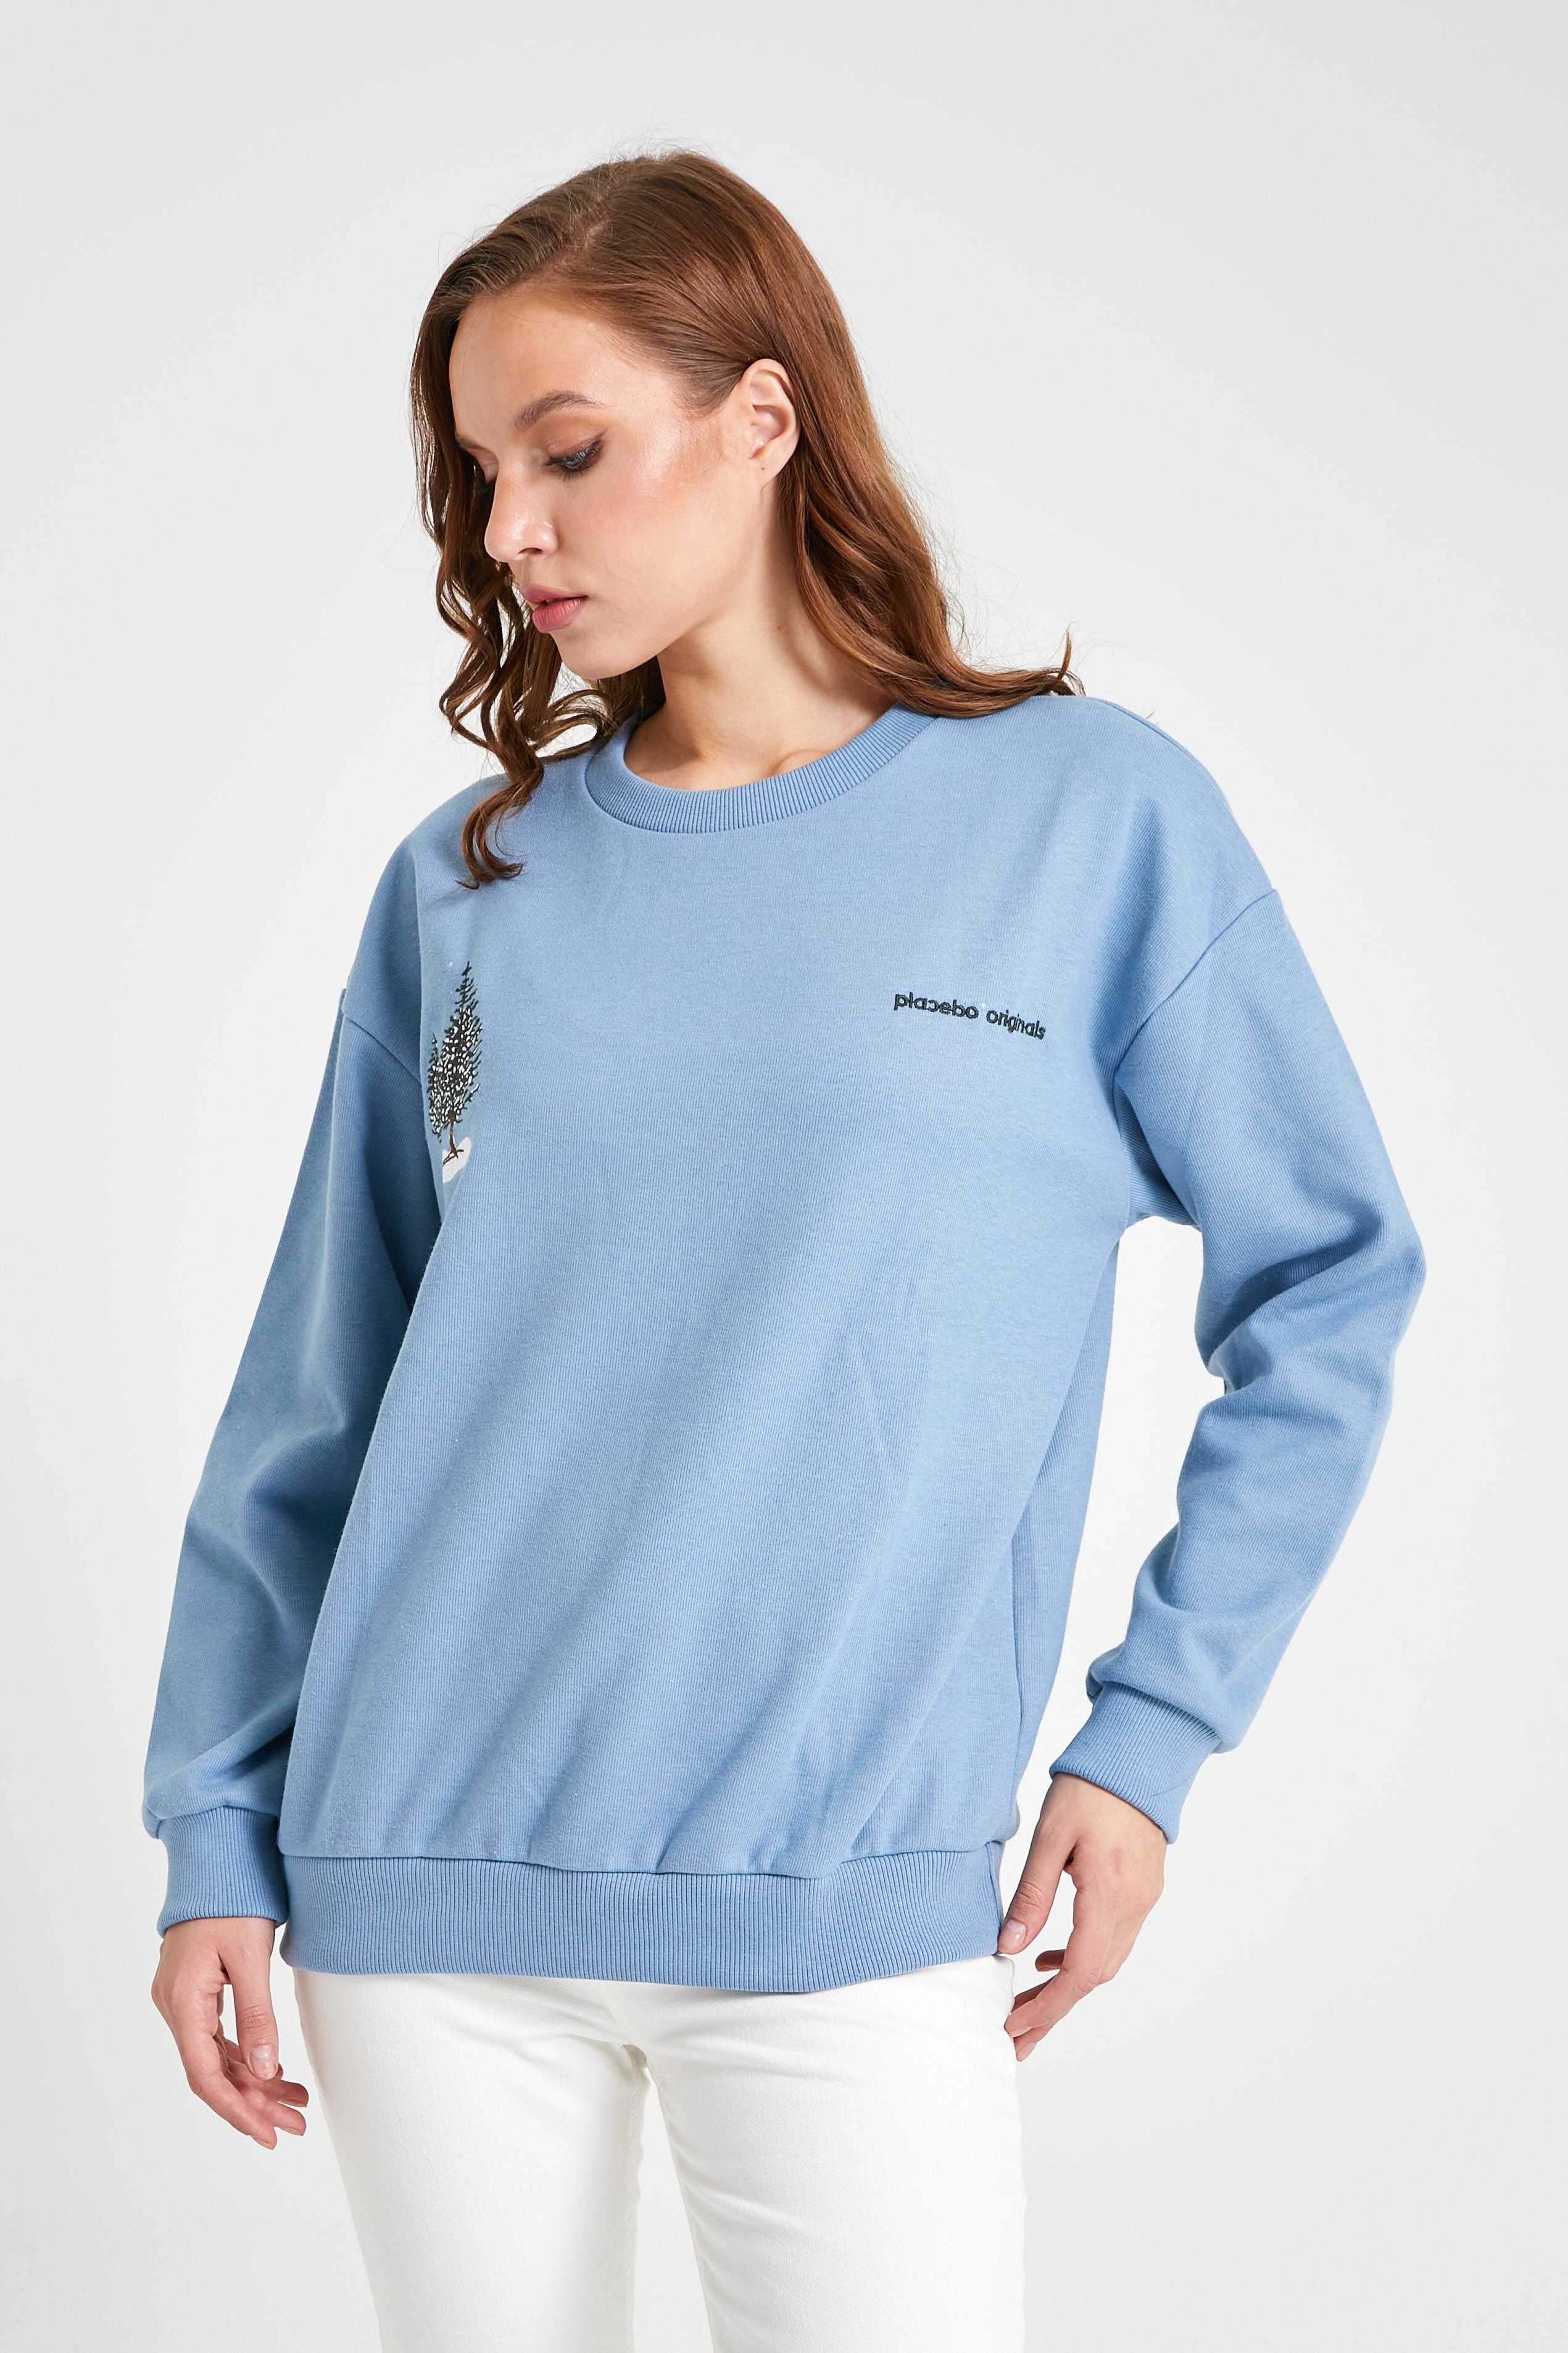 Winter Dreaming Unisex Sweatshirt